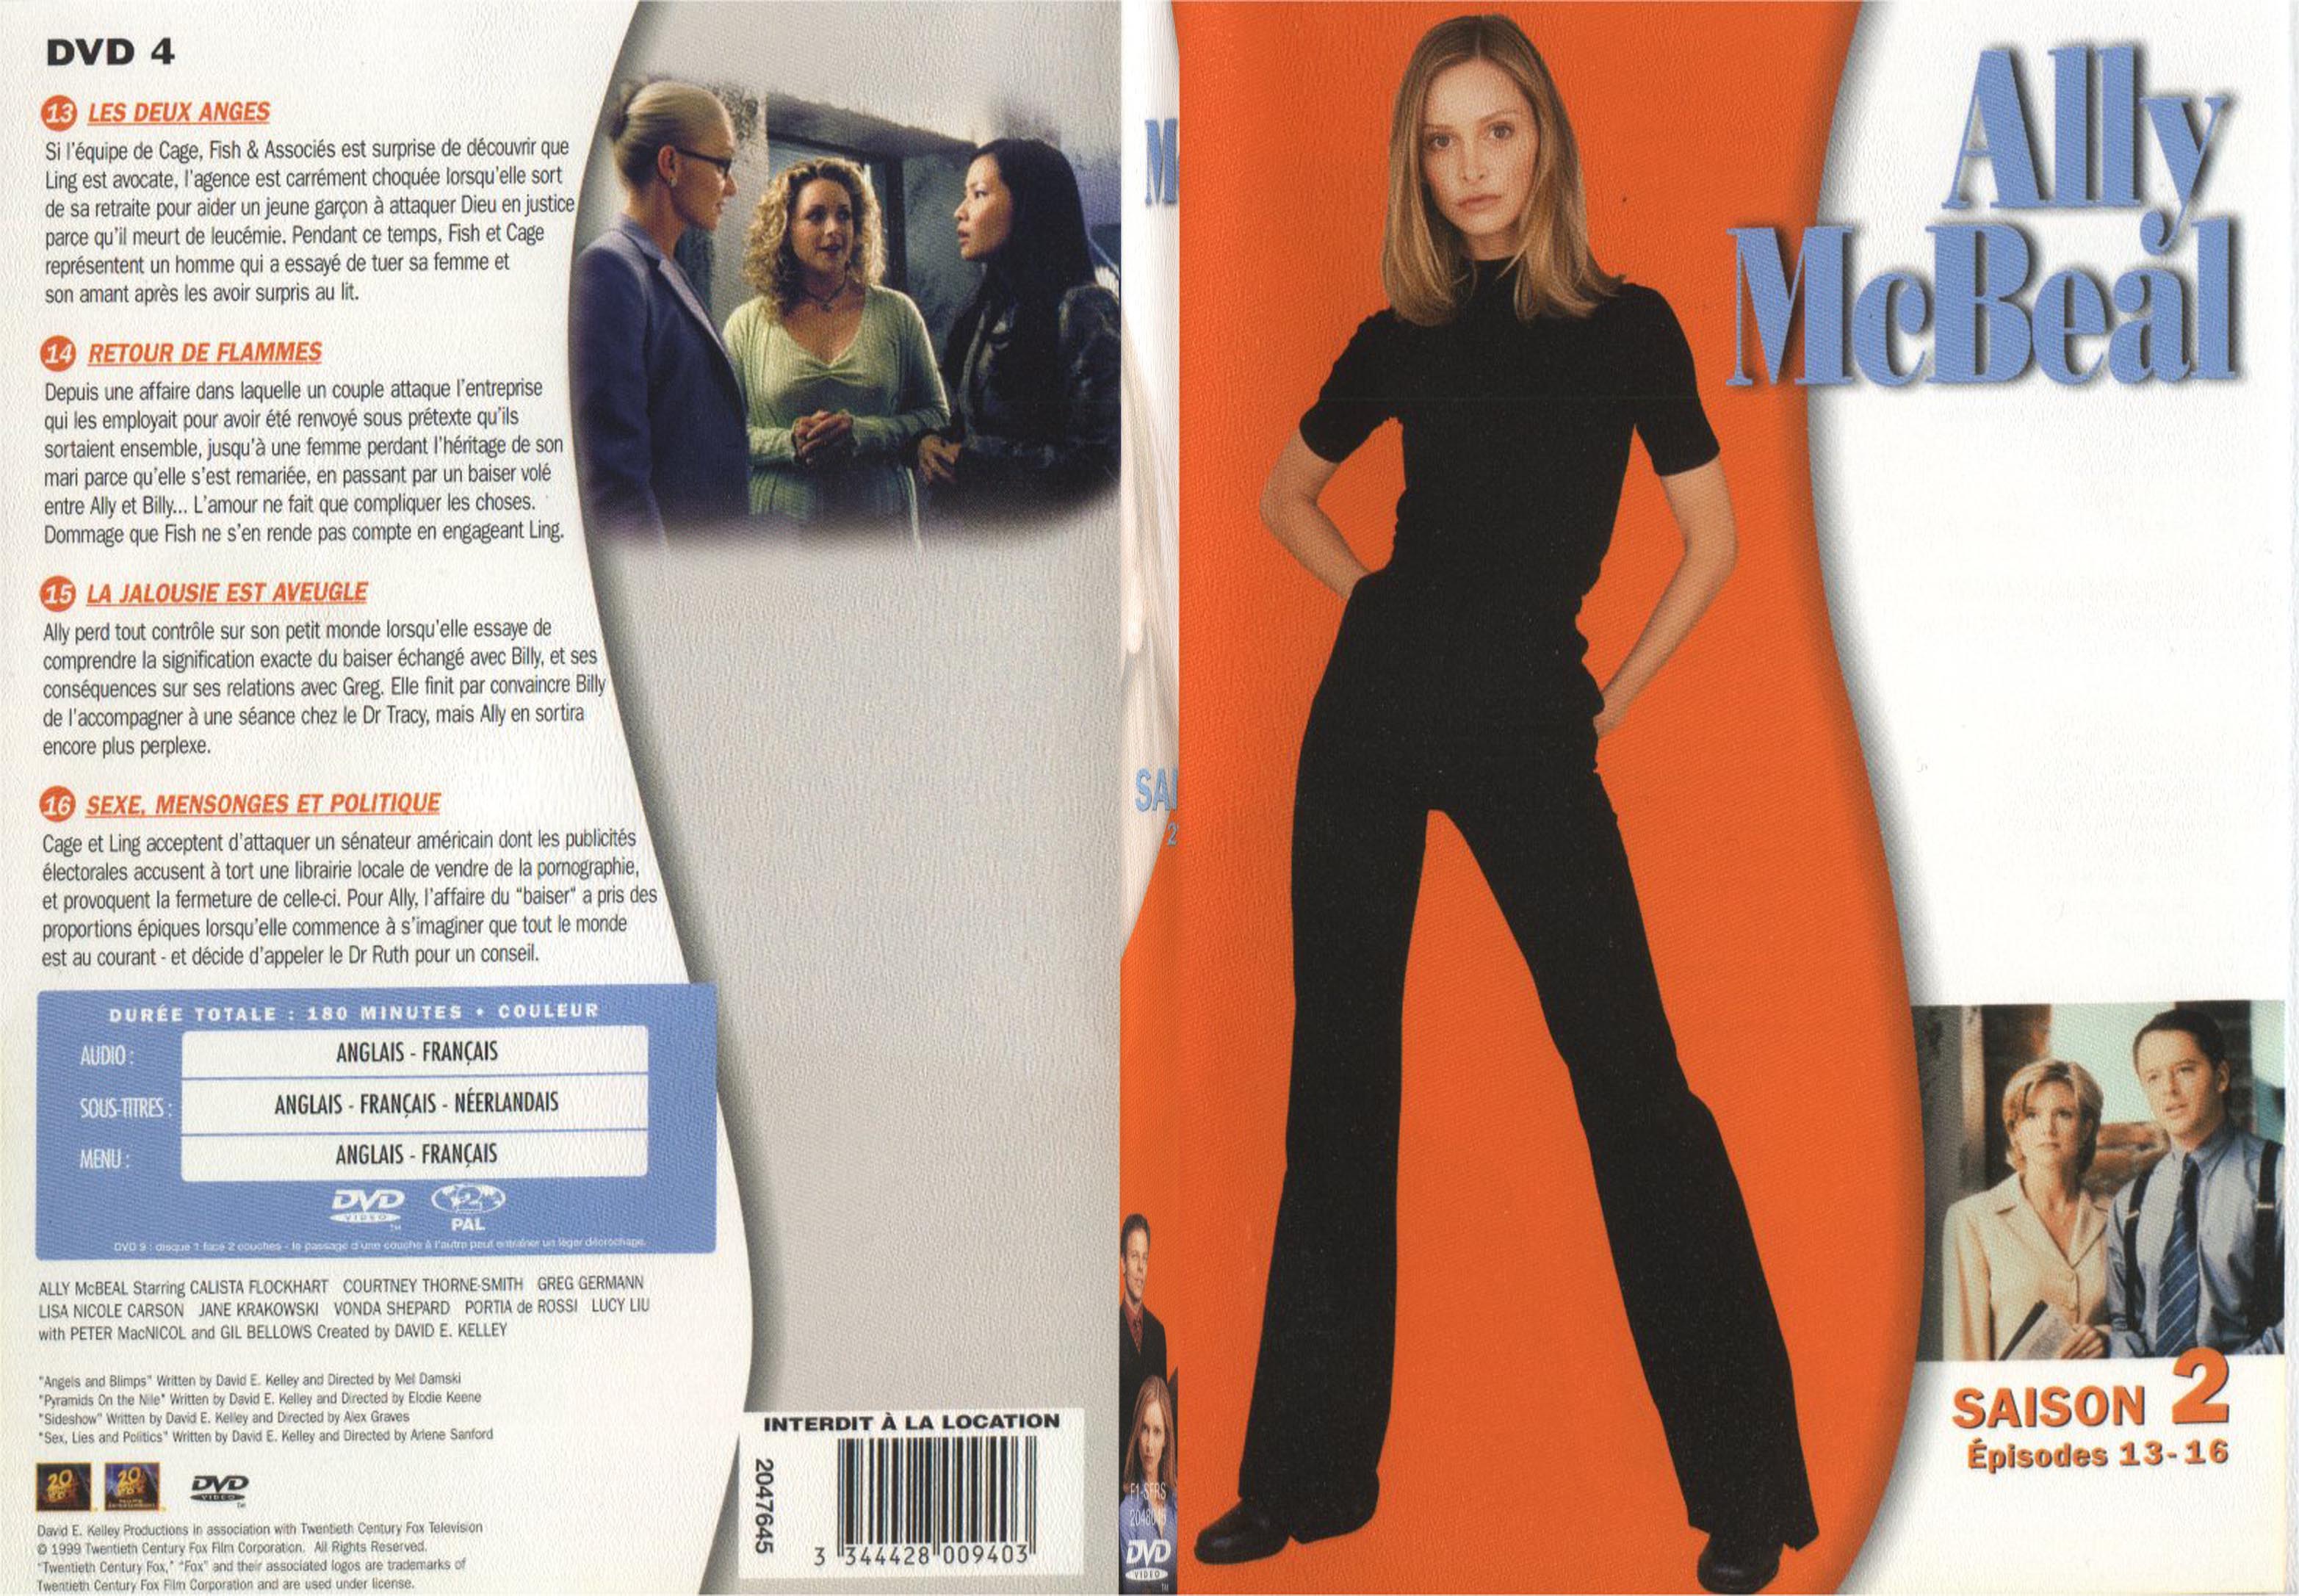 Jaquette DVD Ally McBeal saison 2 dvd 4 - SLIM